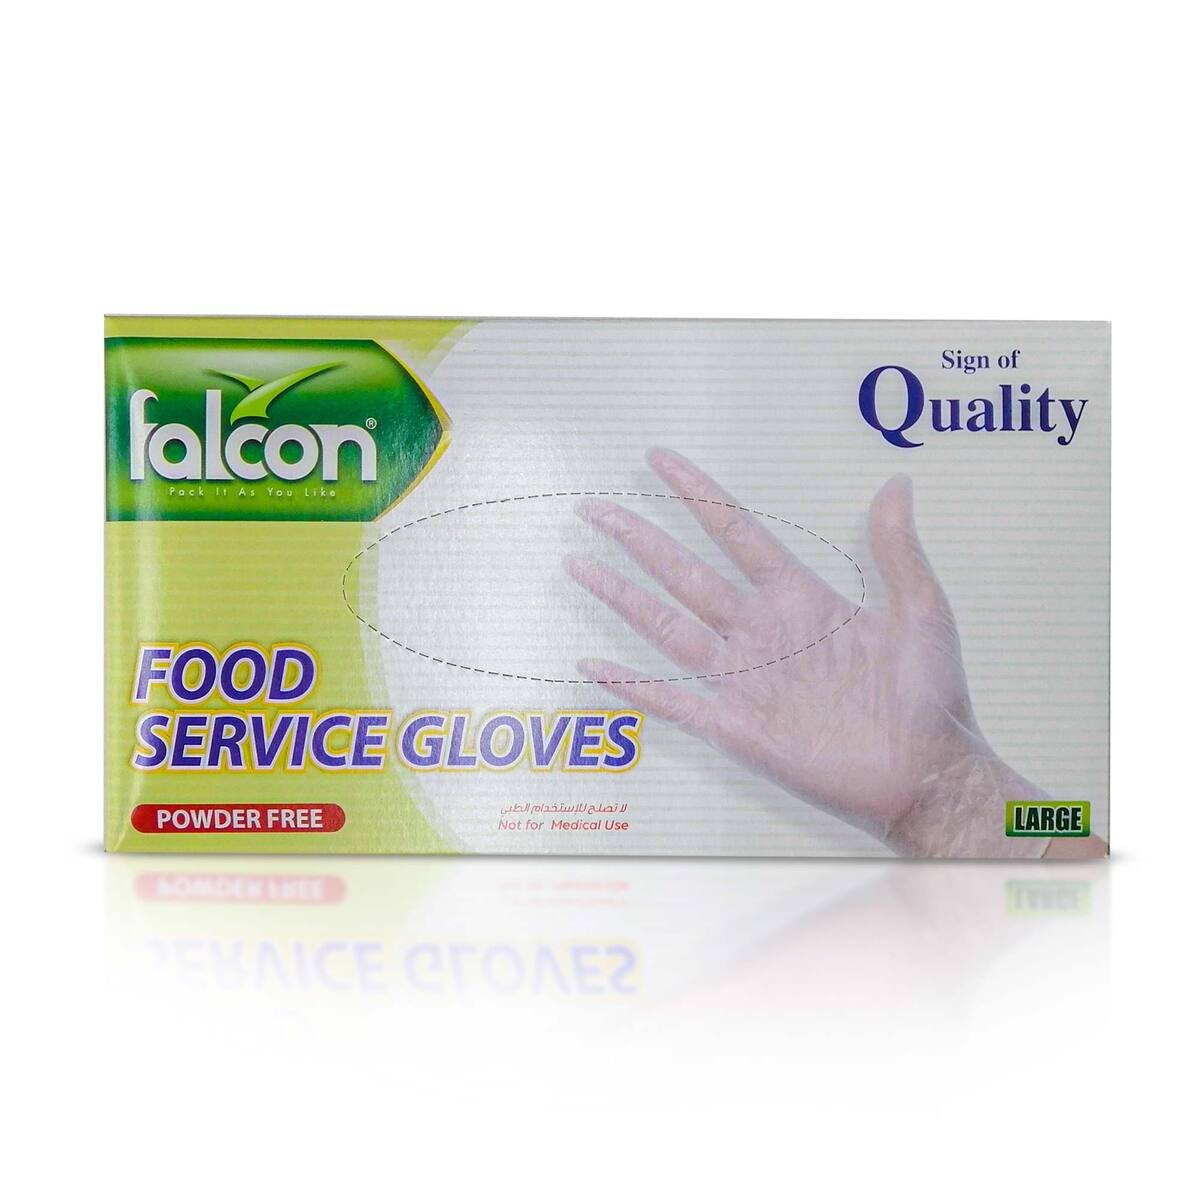 Falcon Food Service Gloves Powder Free Large 100pcs